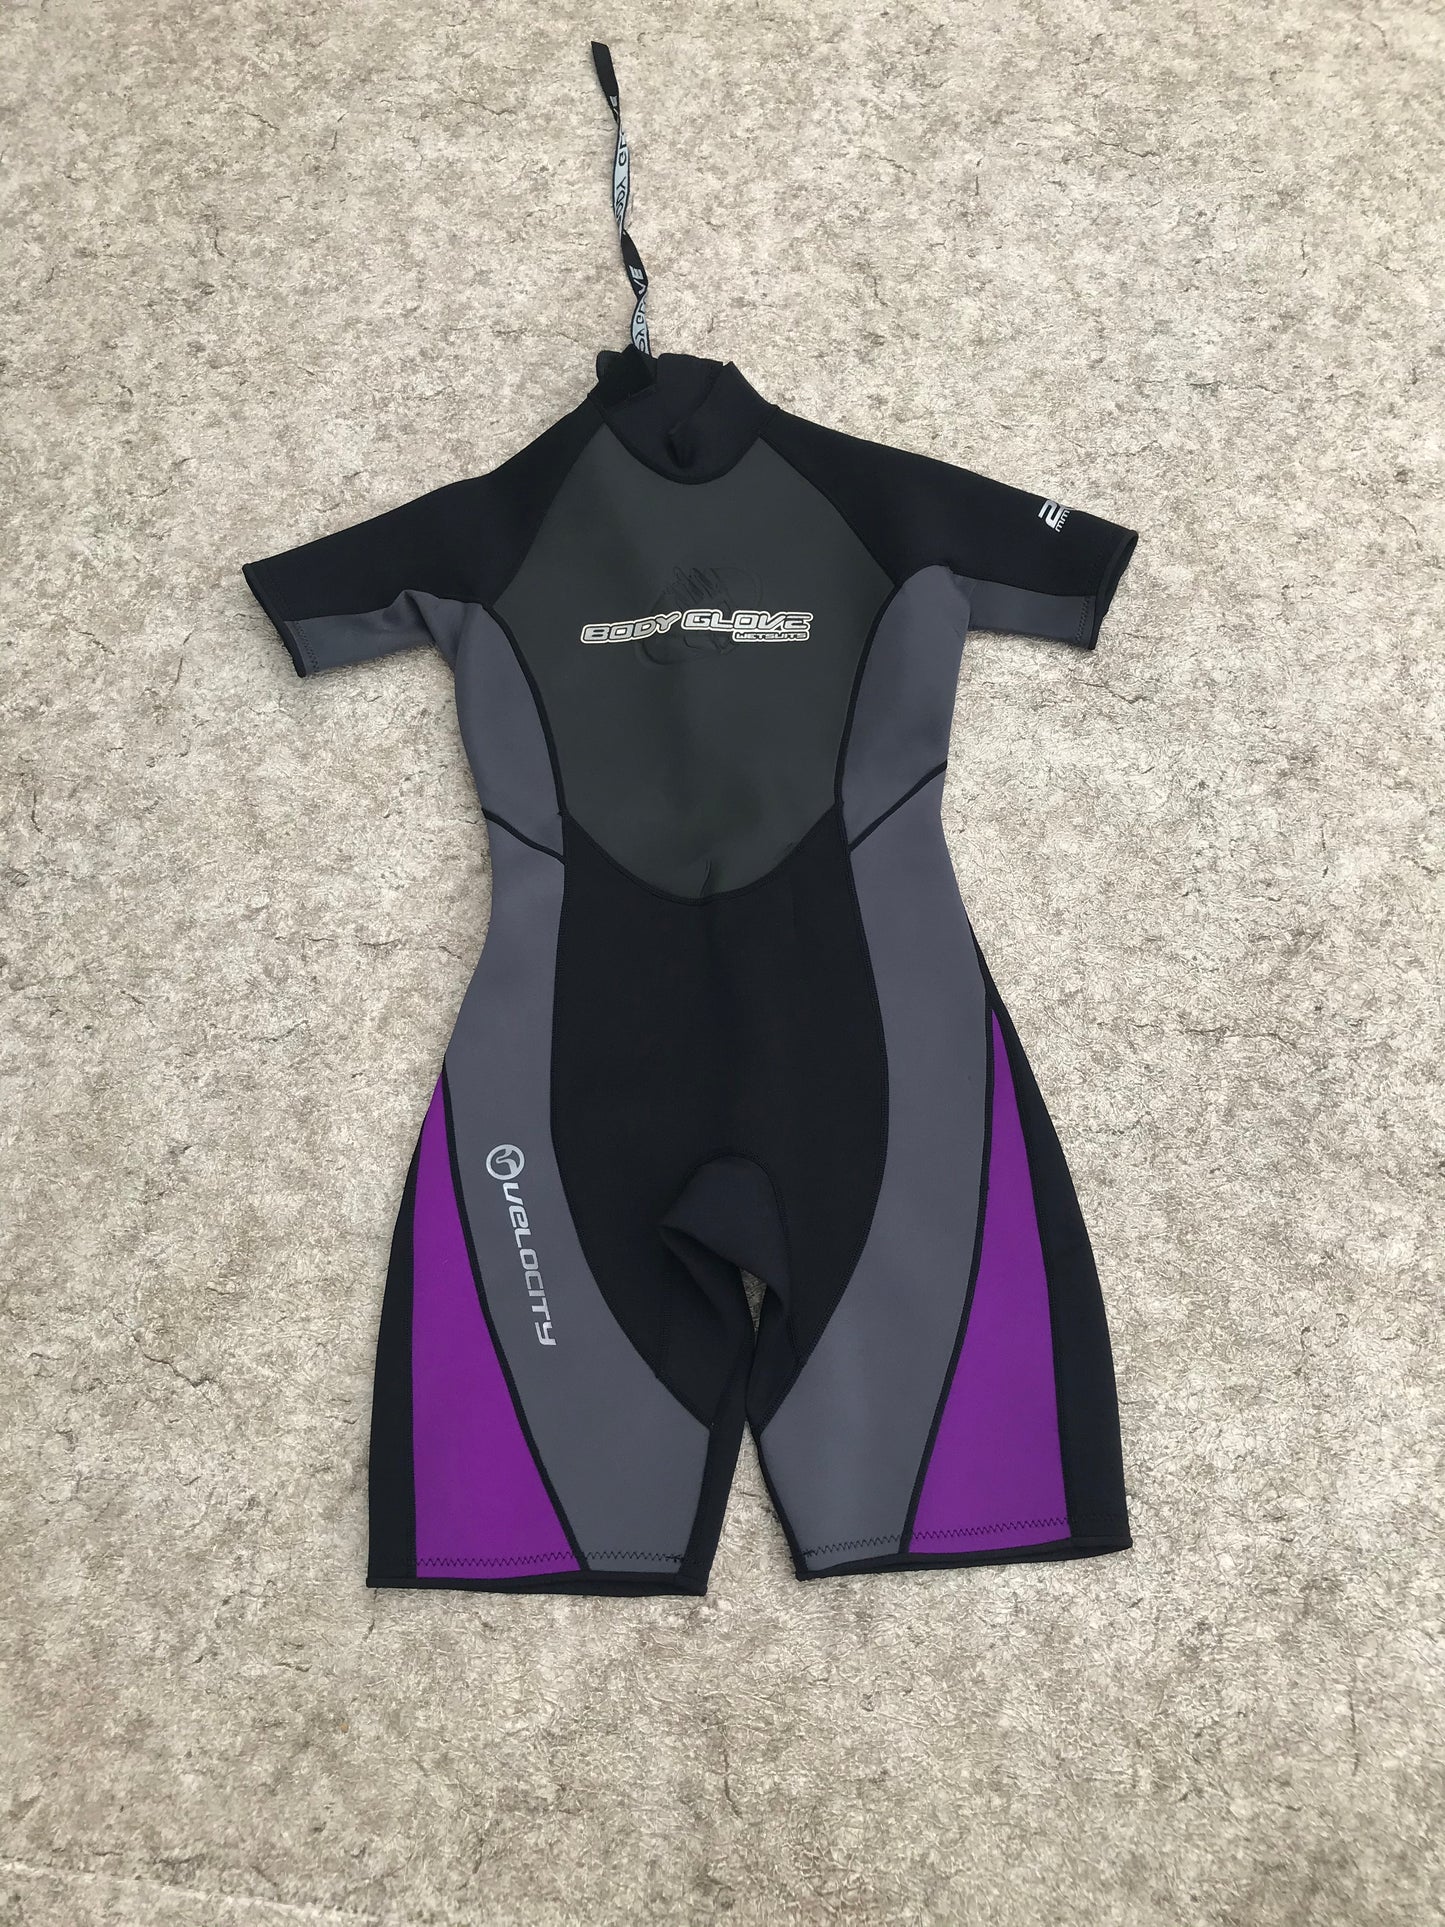 Wetsuit Ladies Size 11-12 Body Glove Black Purple 2-3 mm Excellent